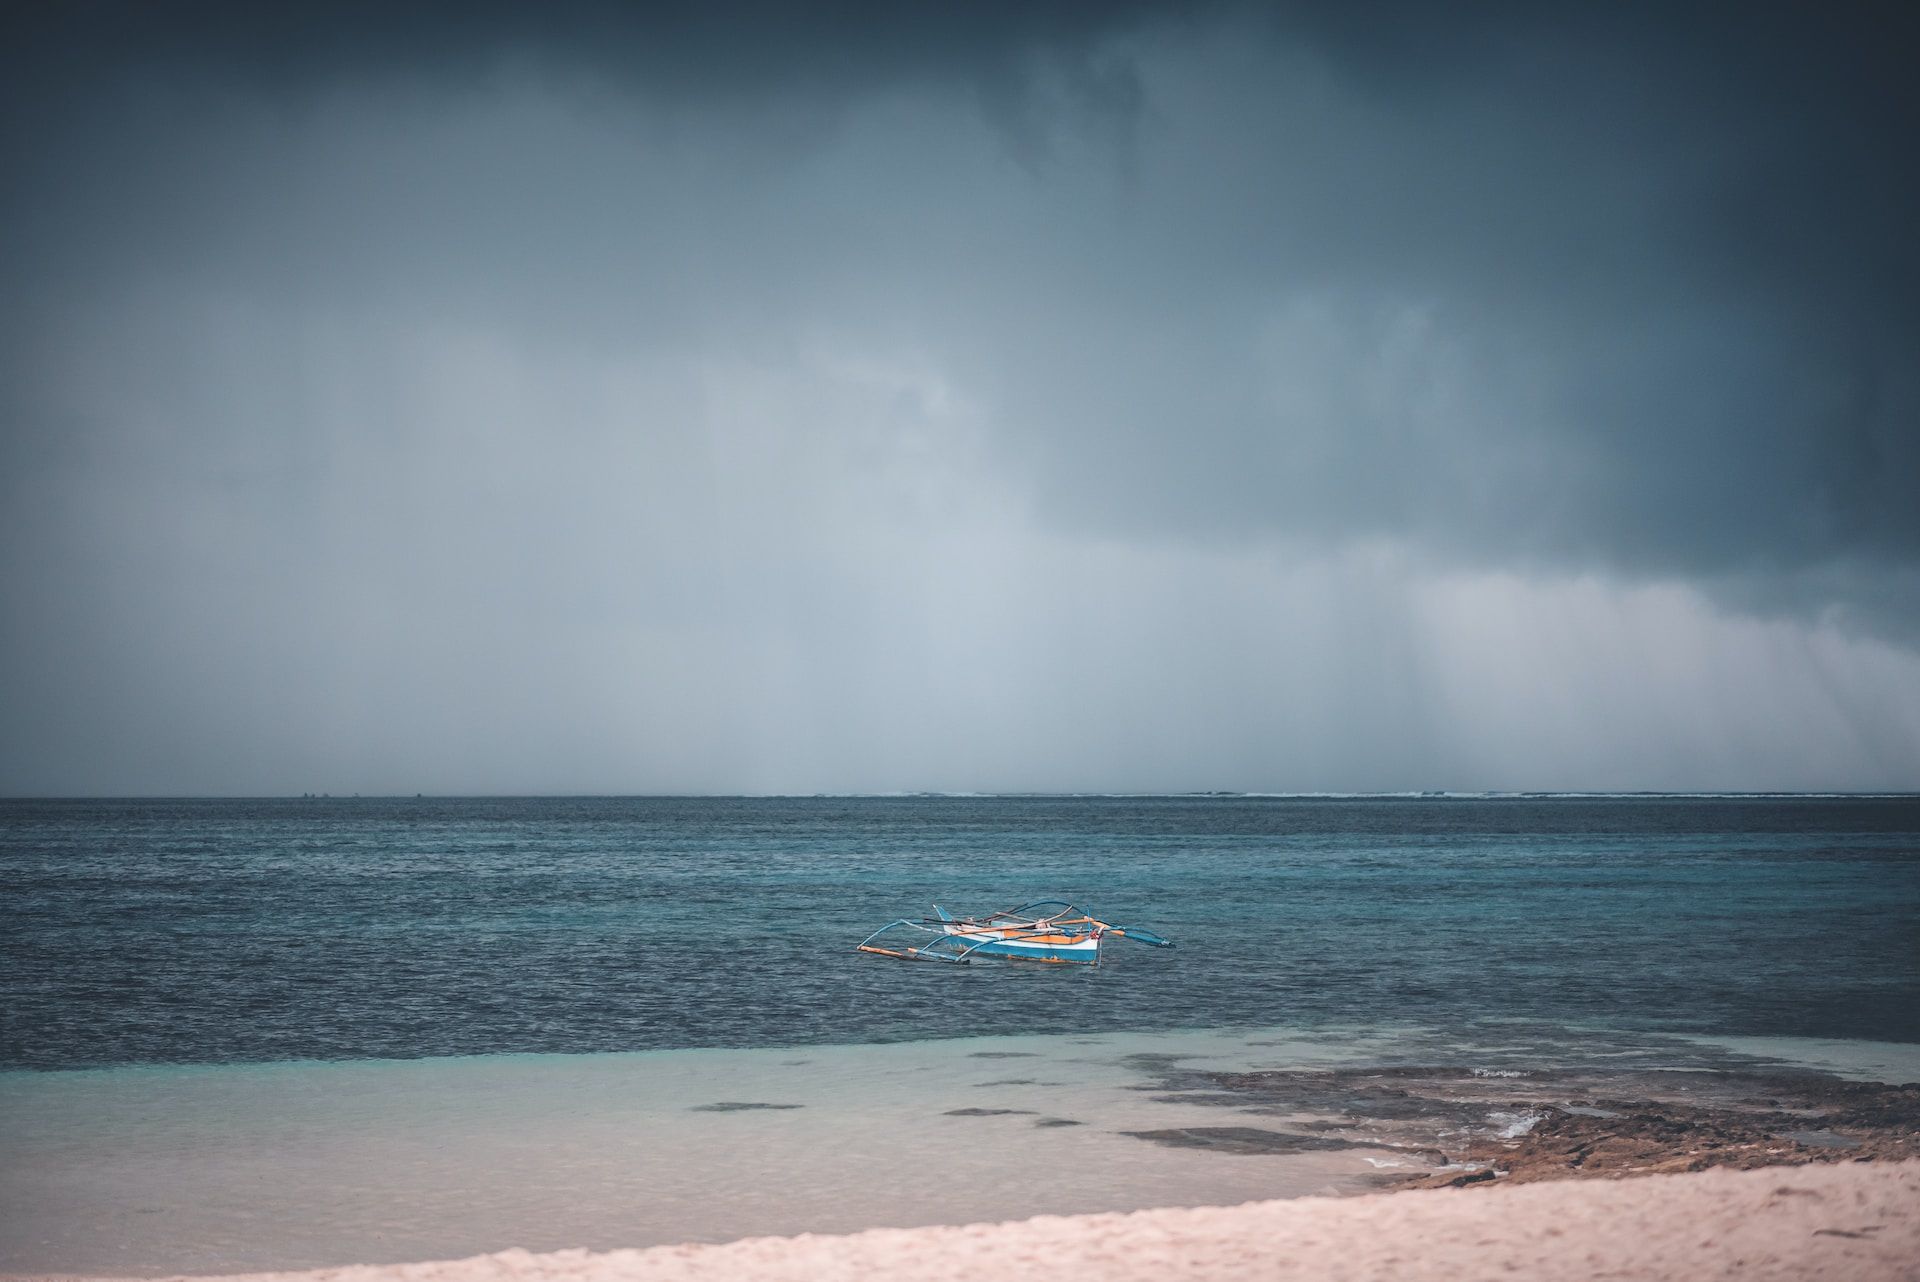 A Lone Boat near Camigun Island, the Philippines